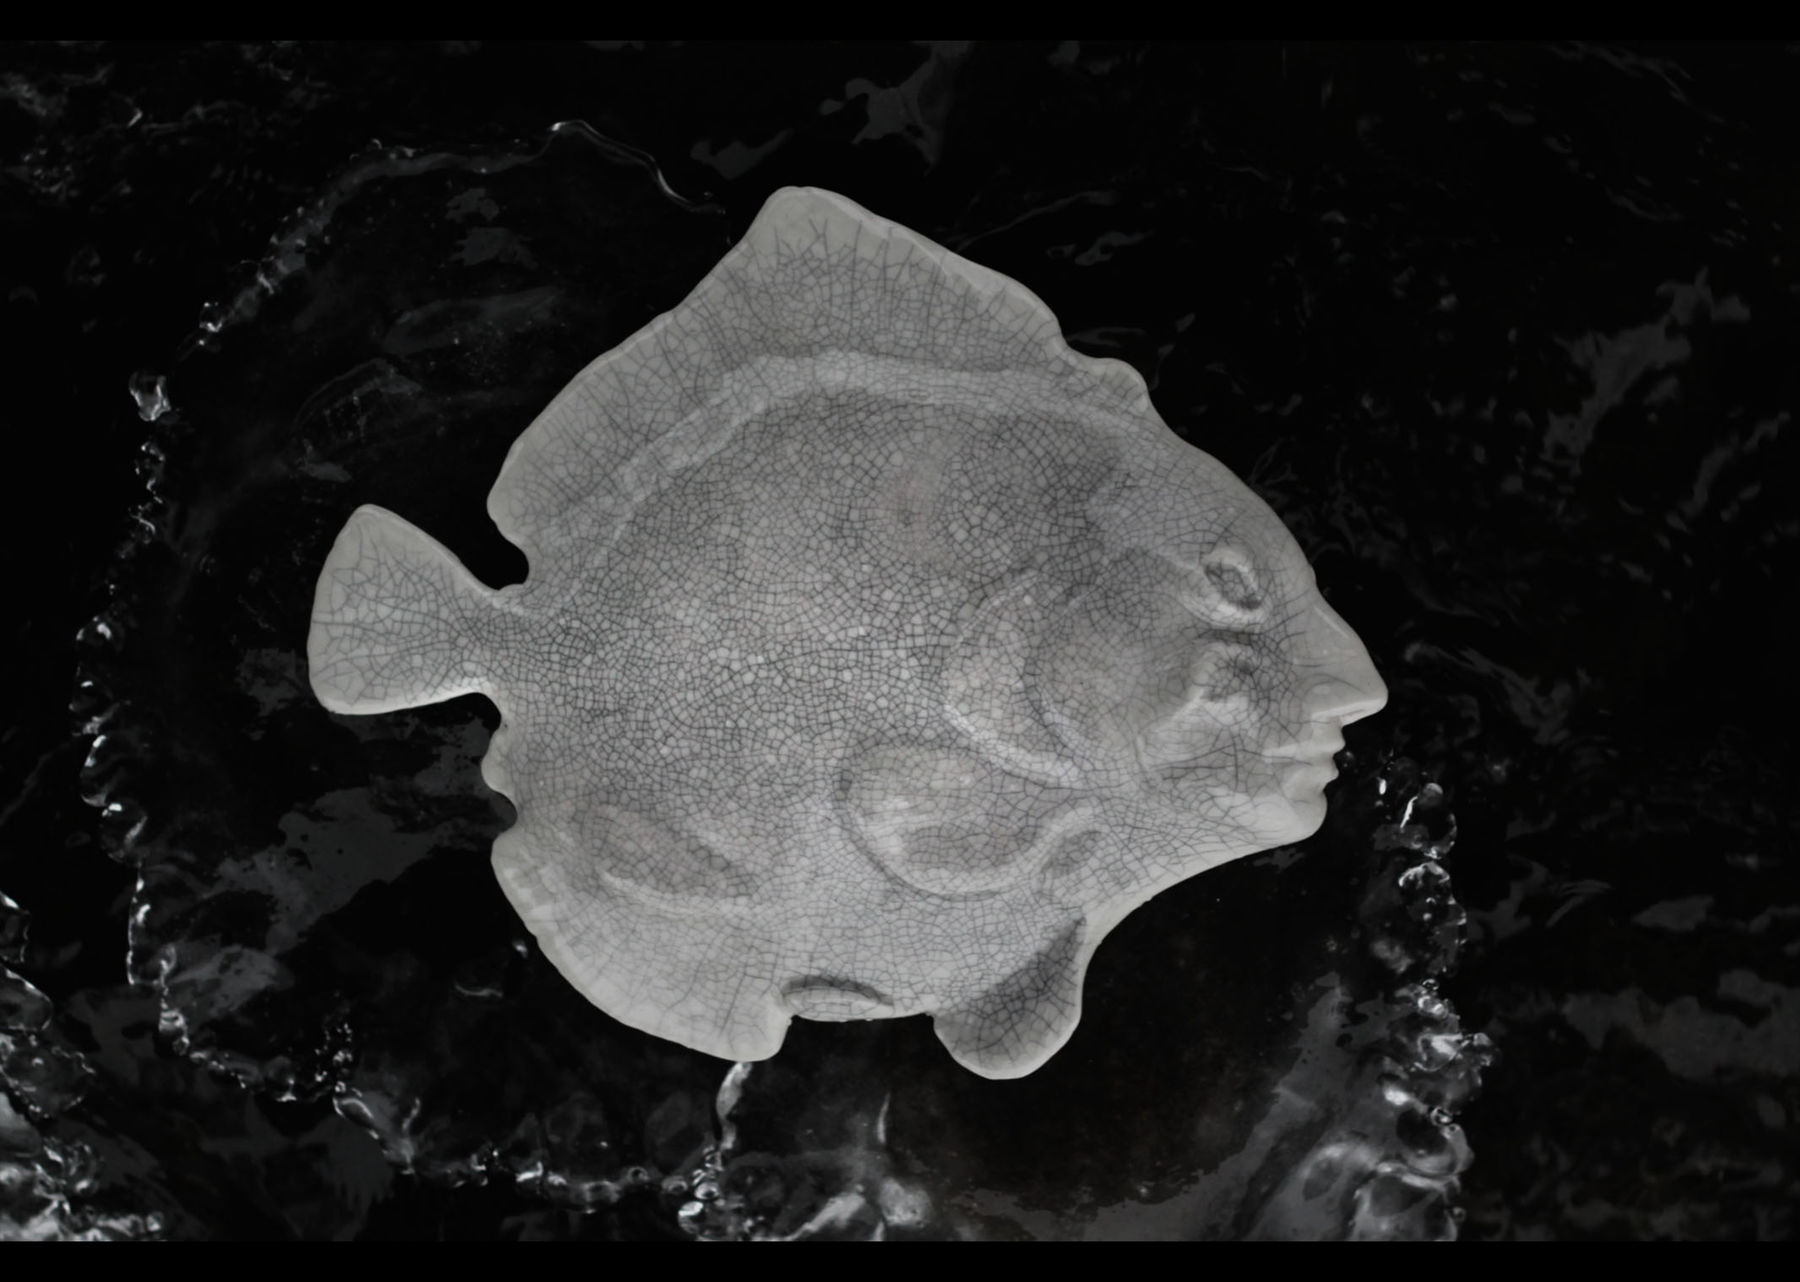 a ceramic fish sculpture lying on dark matter